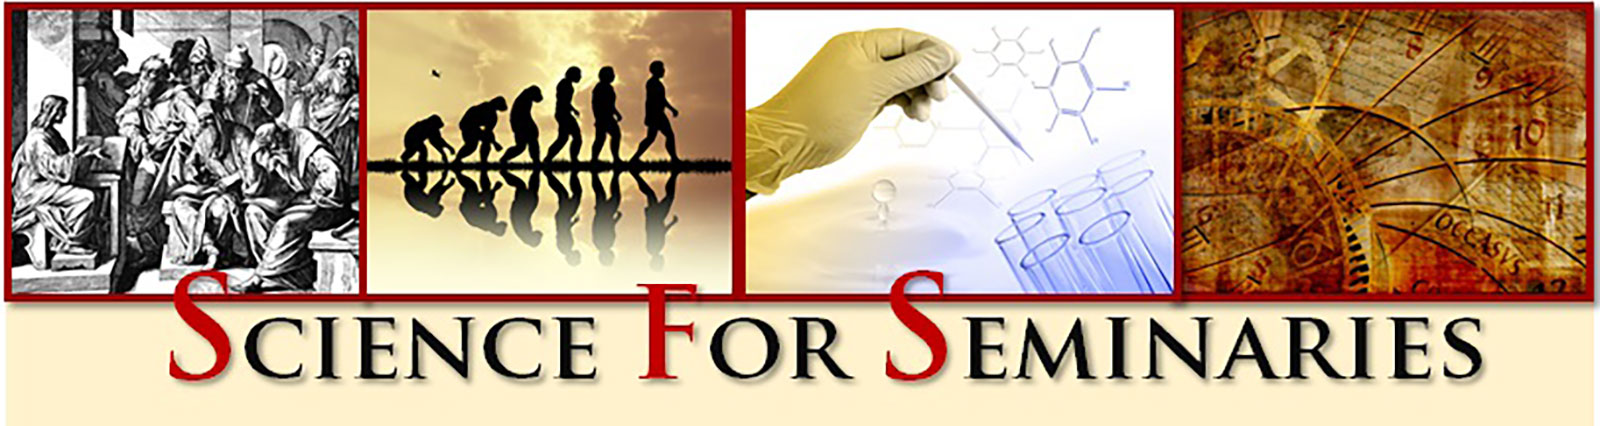 Science for Seminaries